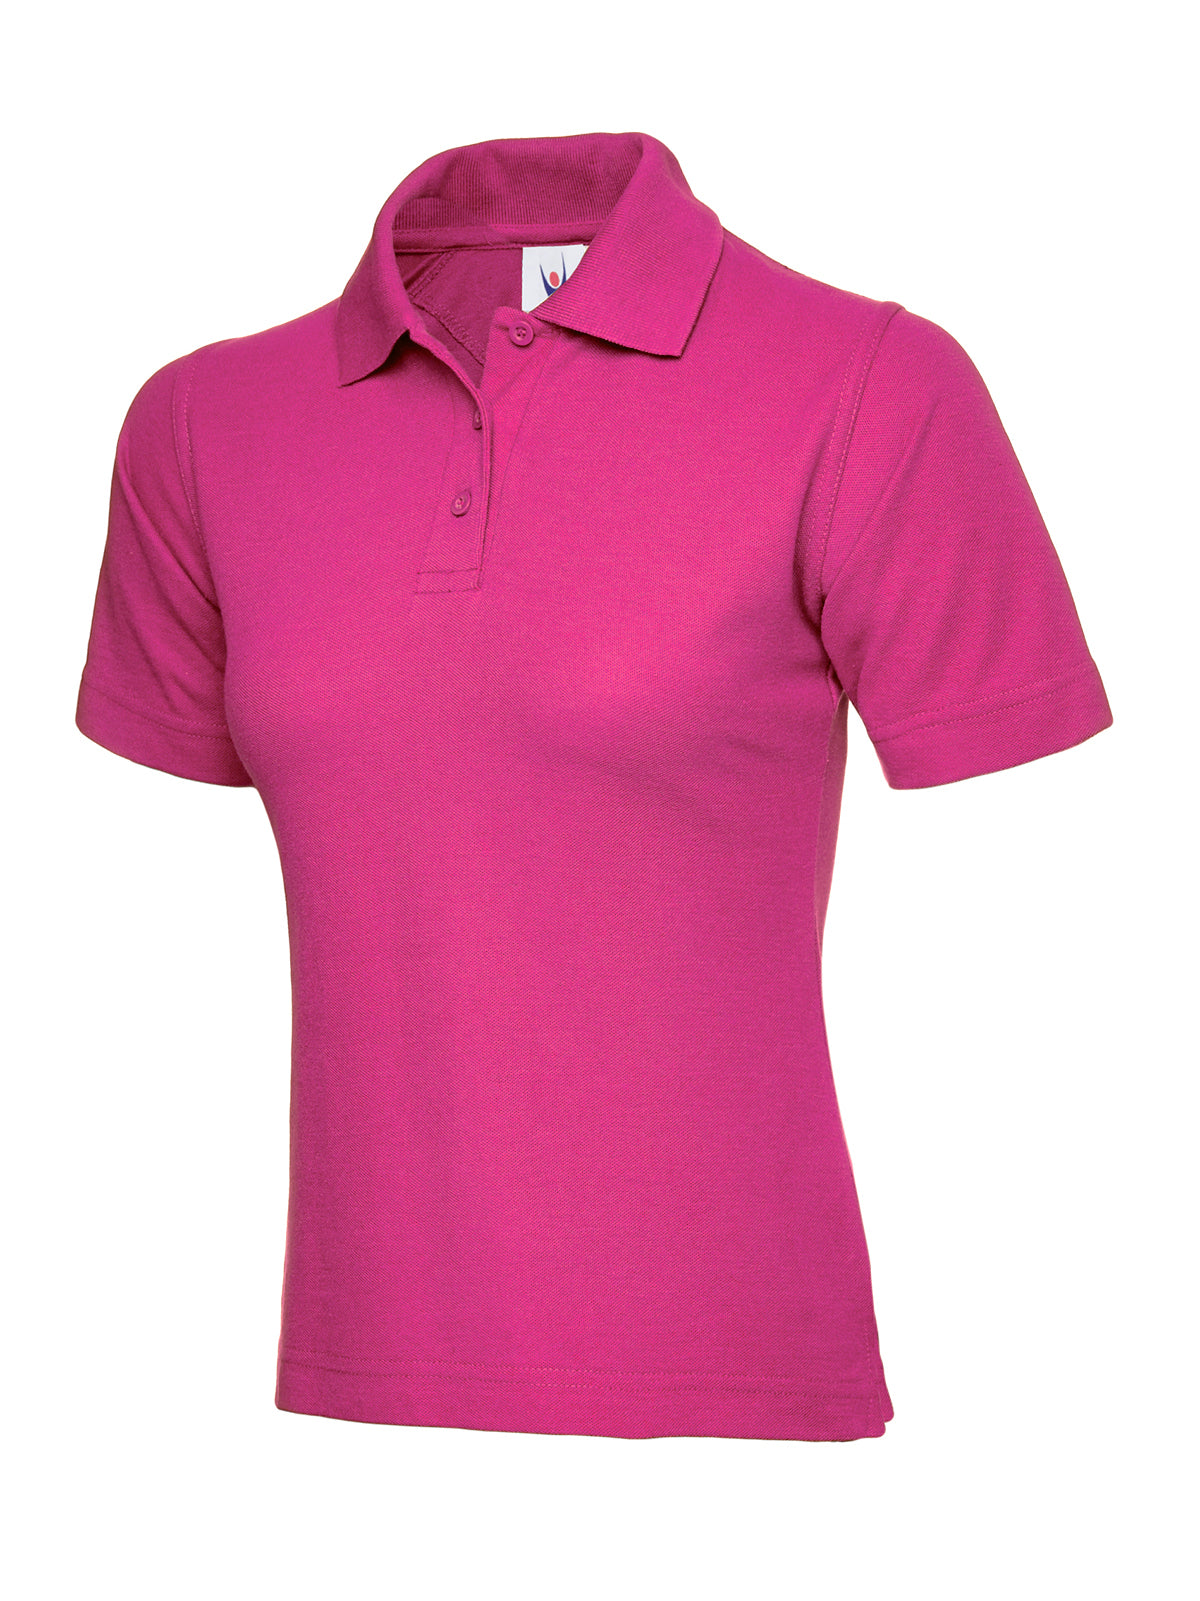 Uneek Ladies Classic Poloshirt UC106 - Hot Pink